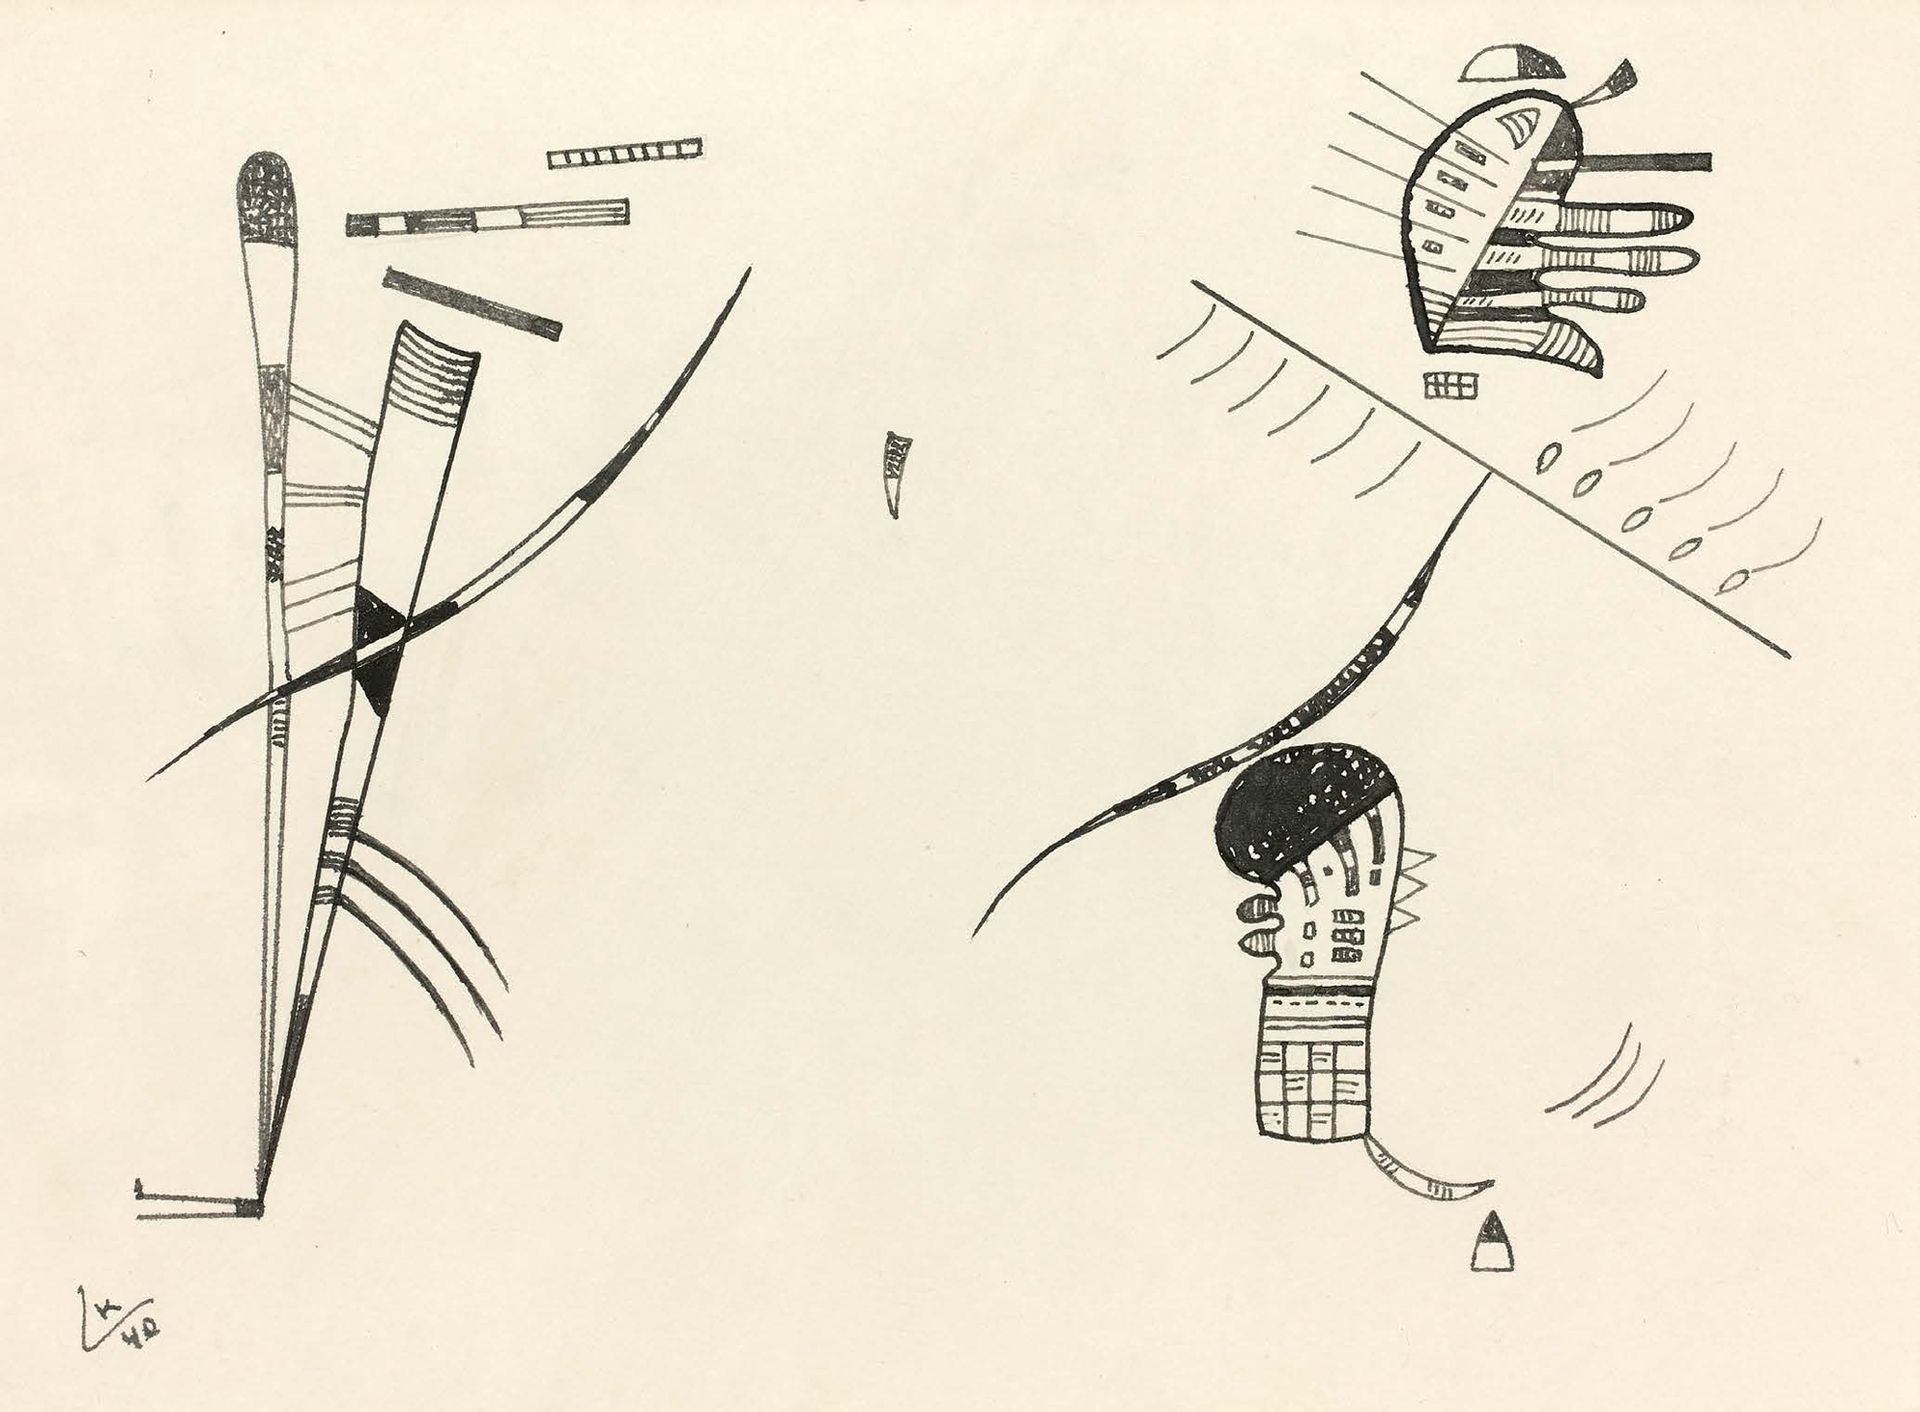 Wassily KANDINSKY (1866-1944) 无题，1940年
纸上印度墨水，左下角有签名和日期。
背面有尼娜-康定斯基的注解 "Kandinsk&hellip;